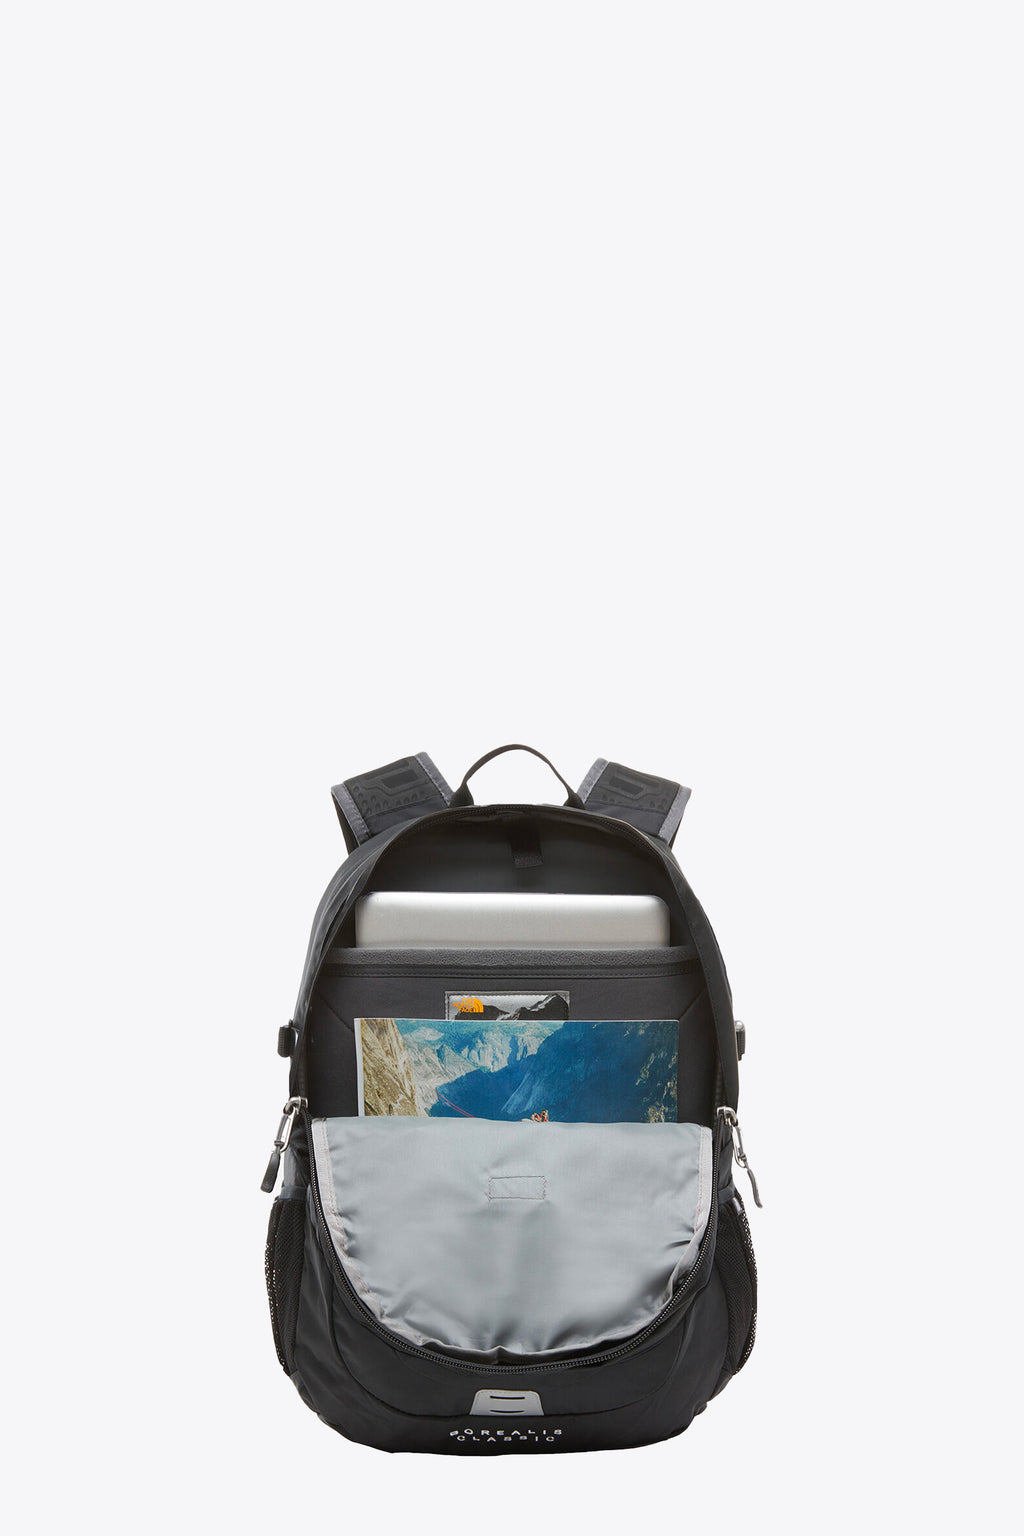 alt-image__Black-nylon-backpack---Borealis-classic